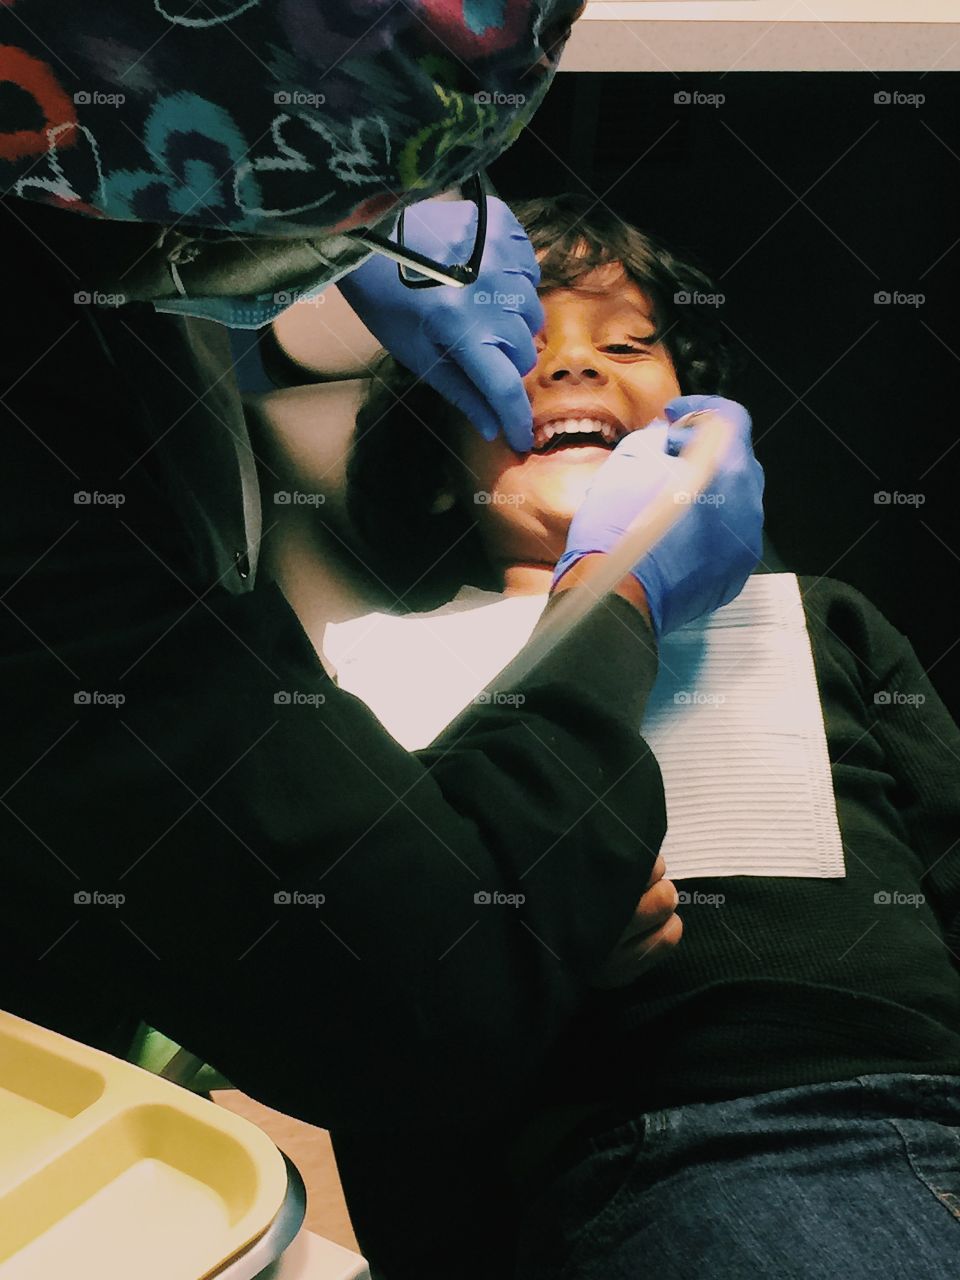 At the dentist 